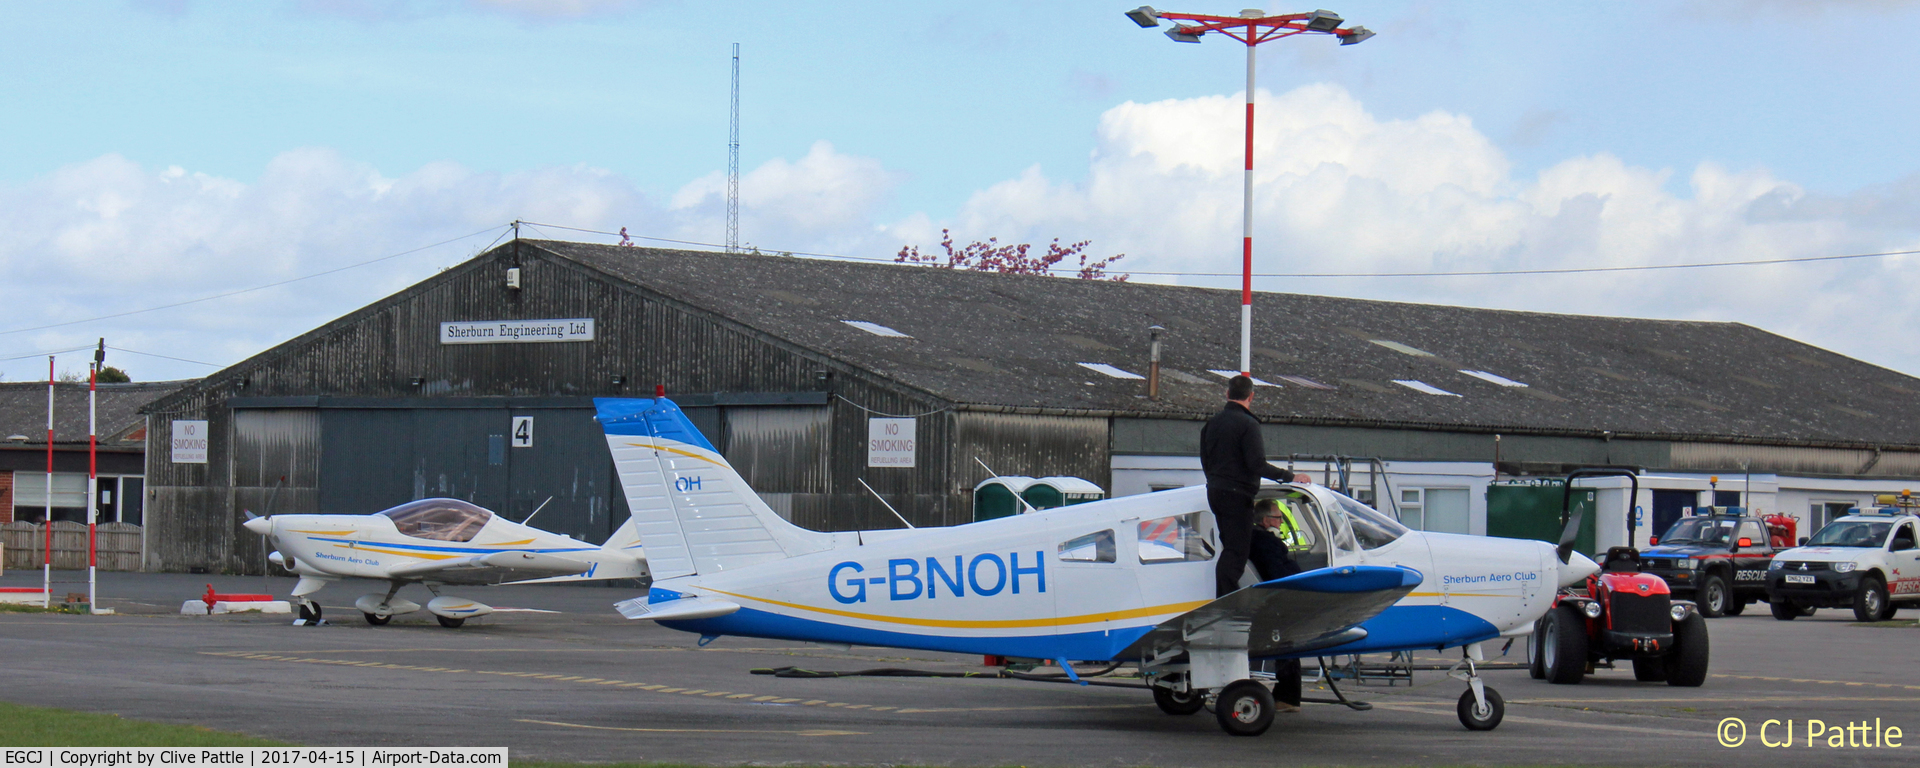 Sherburn-in-Elmet Airfield Airport, Sherburn-in-Elmet, England United Kingdom (EGCJ) - Aircraft refuelling operations at EGCJ